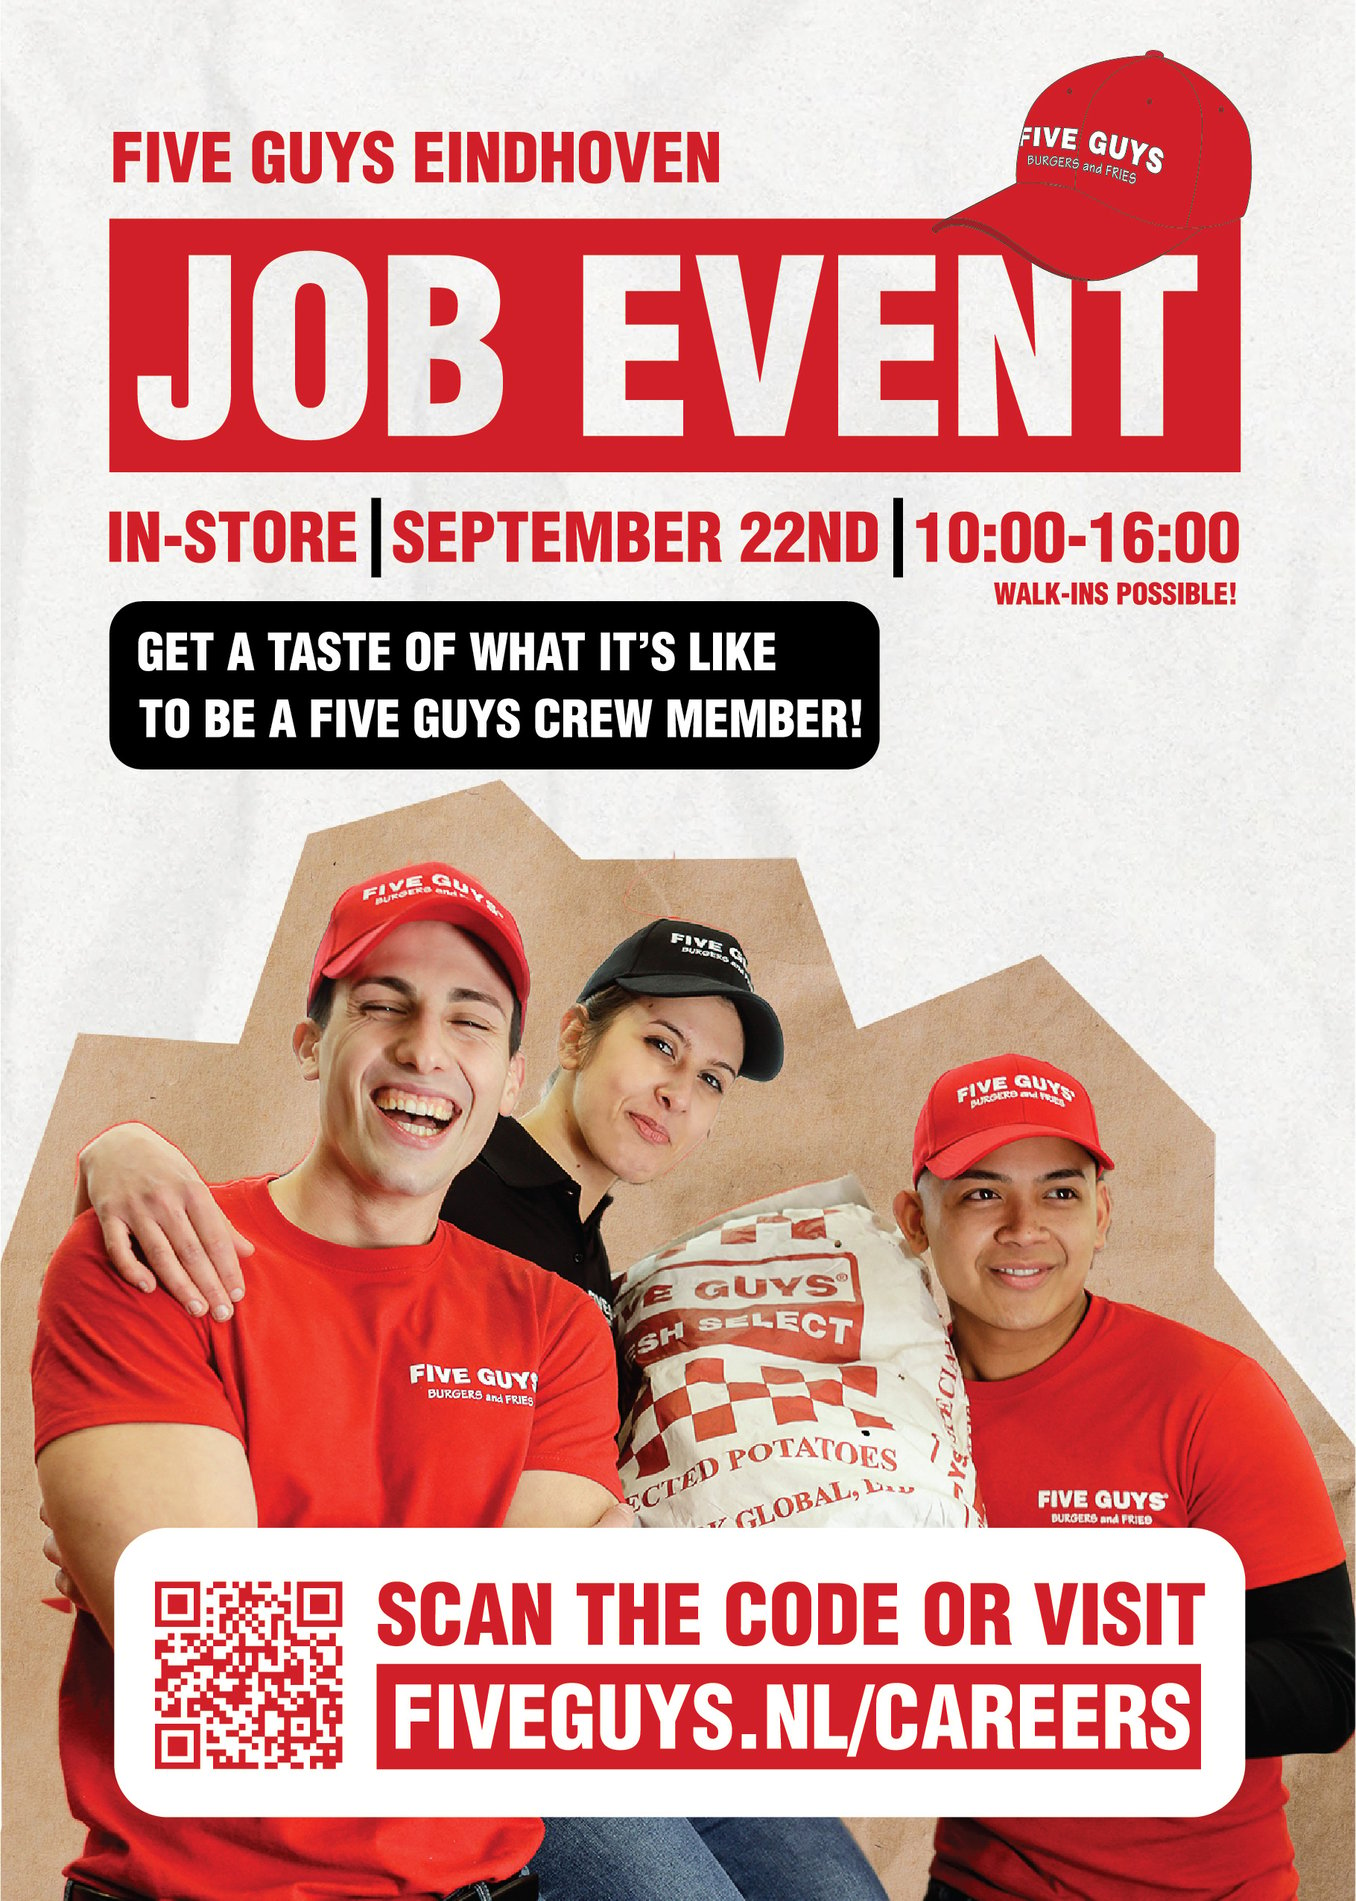 Five Guys Eindhoven Job Event